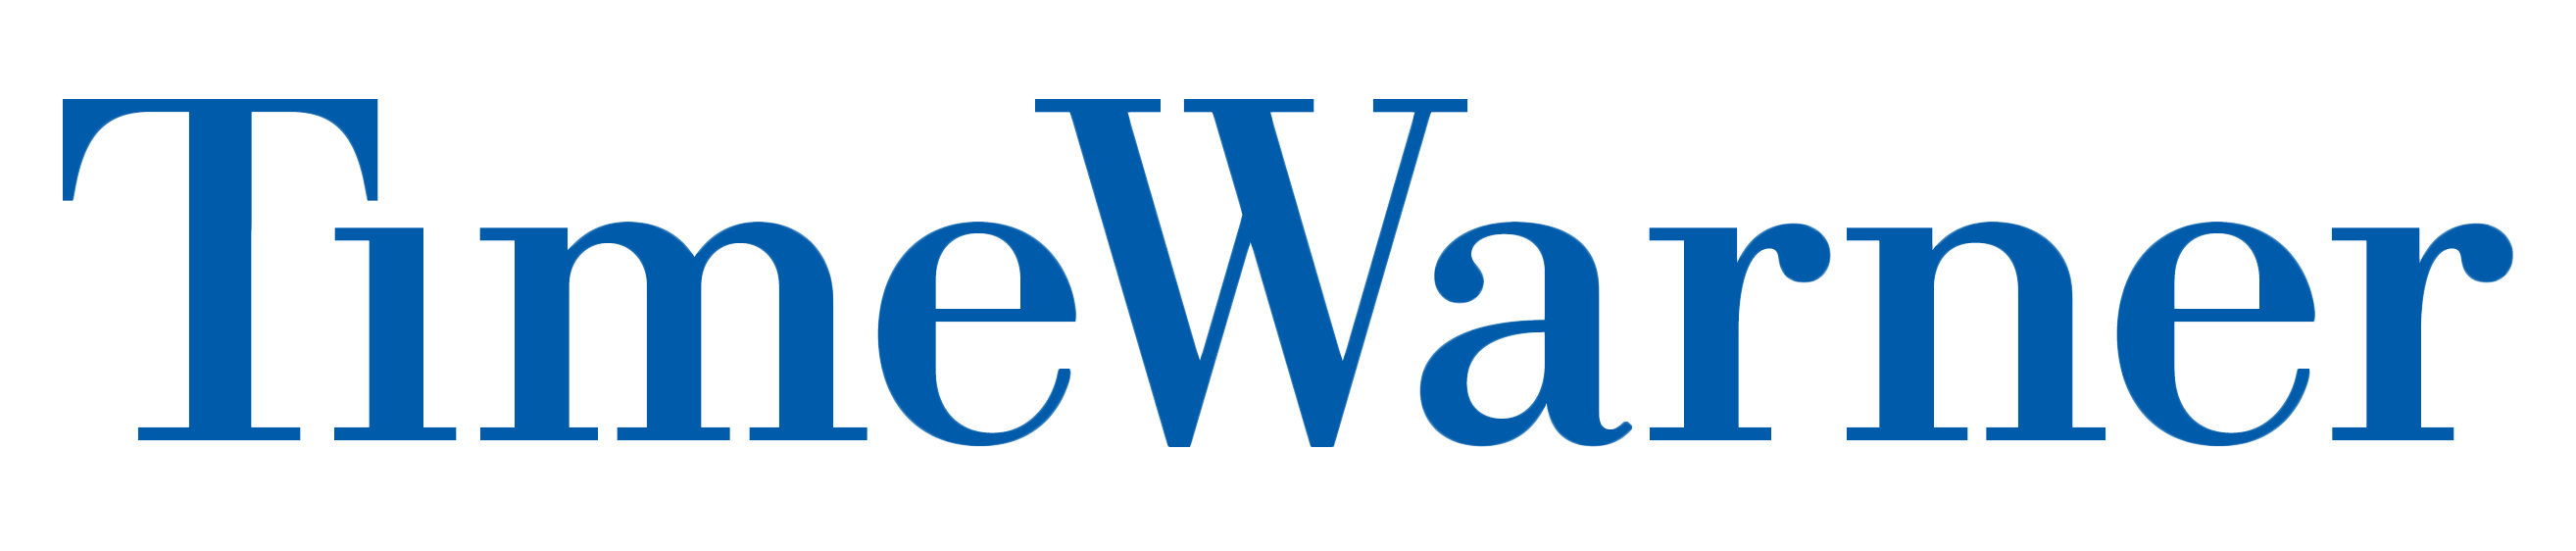 Time Warner Logo PNG Image